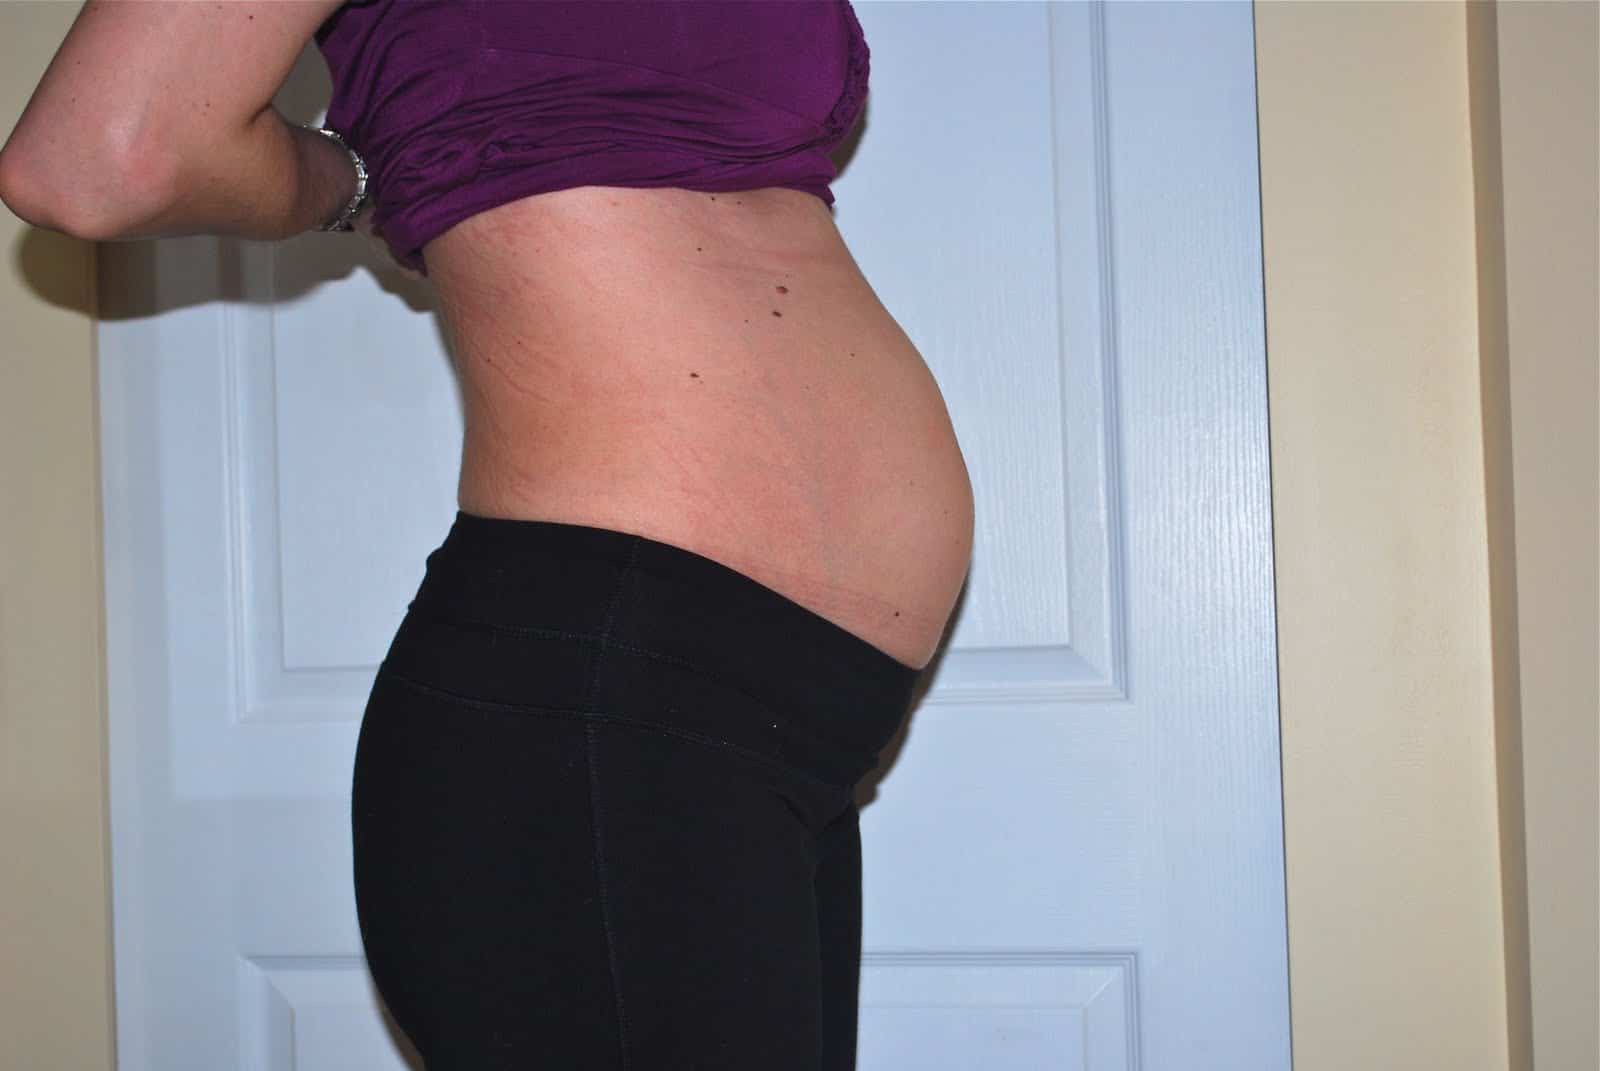 Фото живот на 5 месяце беременности фото